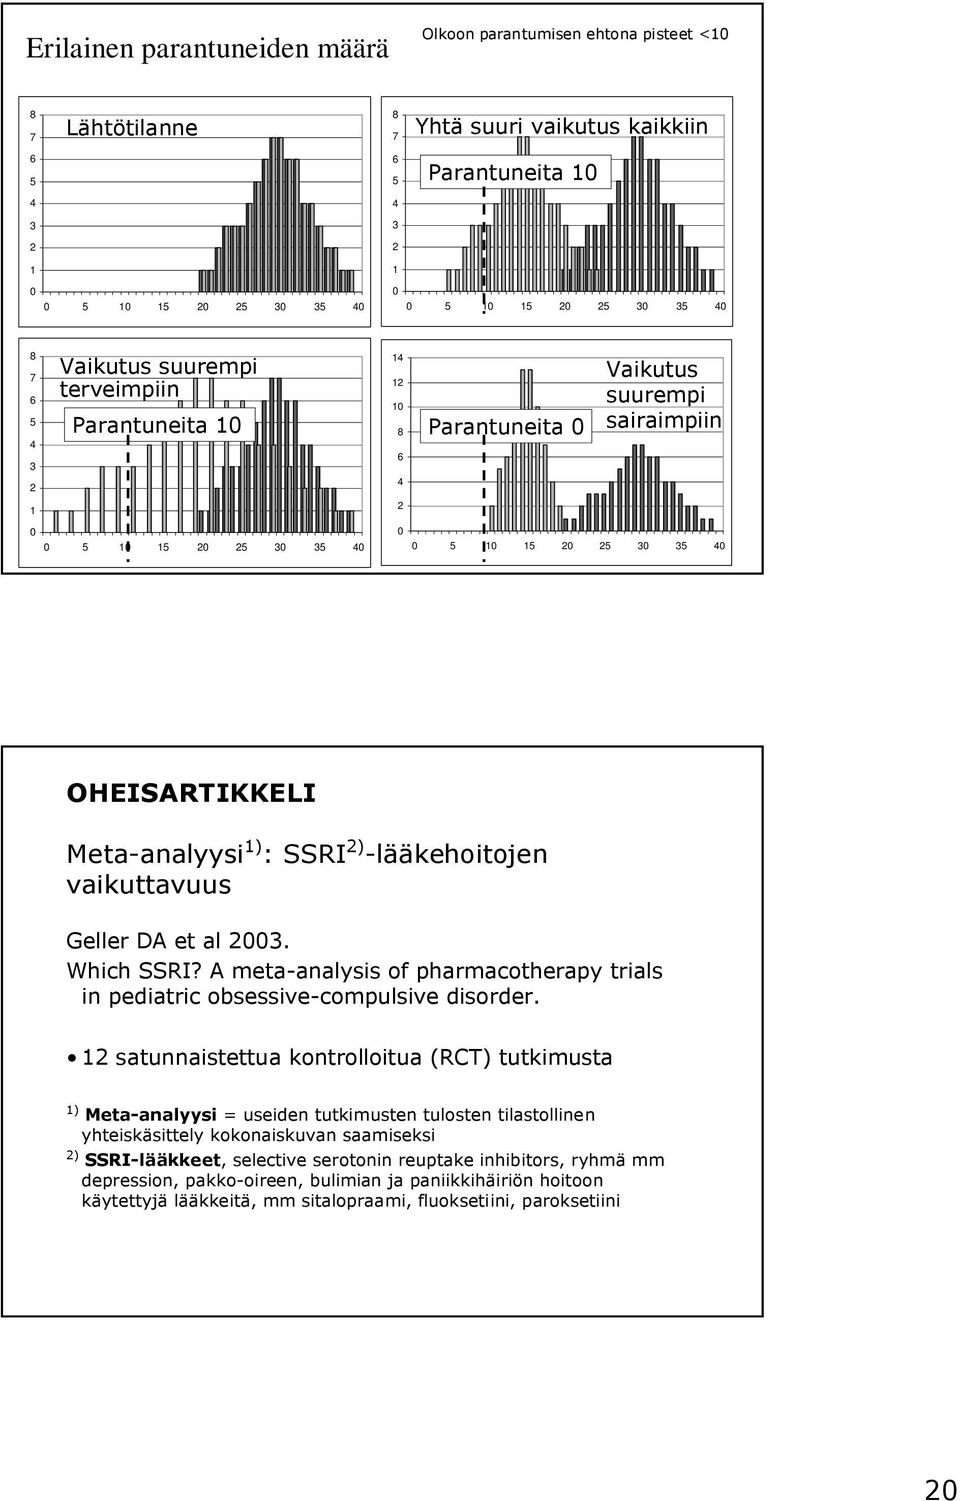 OHEISARTIKKELI Meta-analyysi 1) : SSRI 2) -lääkehoitojen vaikuttavuus Geller DA et al 2003. Which SSRI? A meta-analysis of pharmacotherapy trials in pediatric obsessive-compulsive disorder.